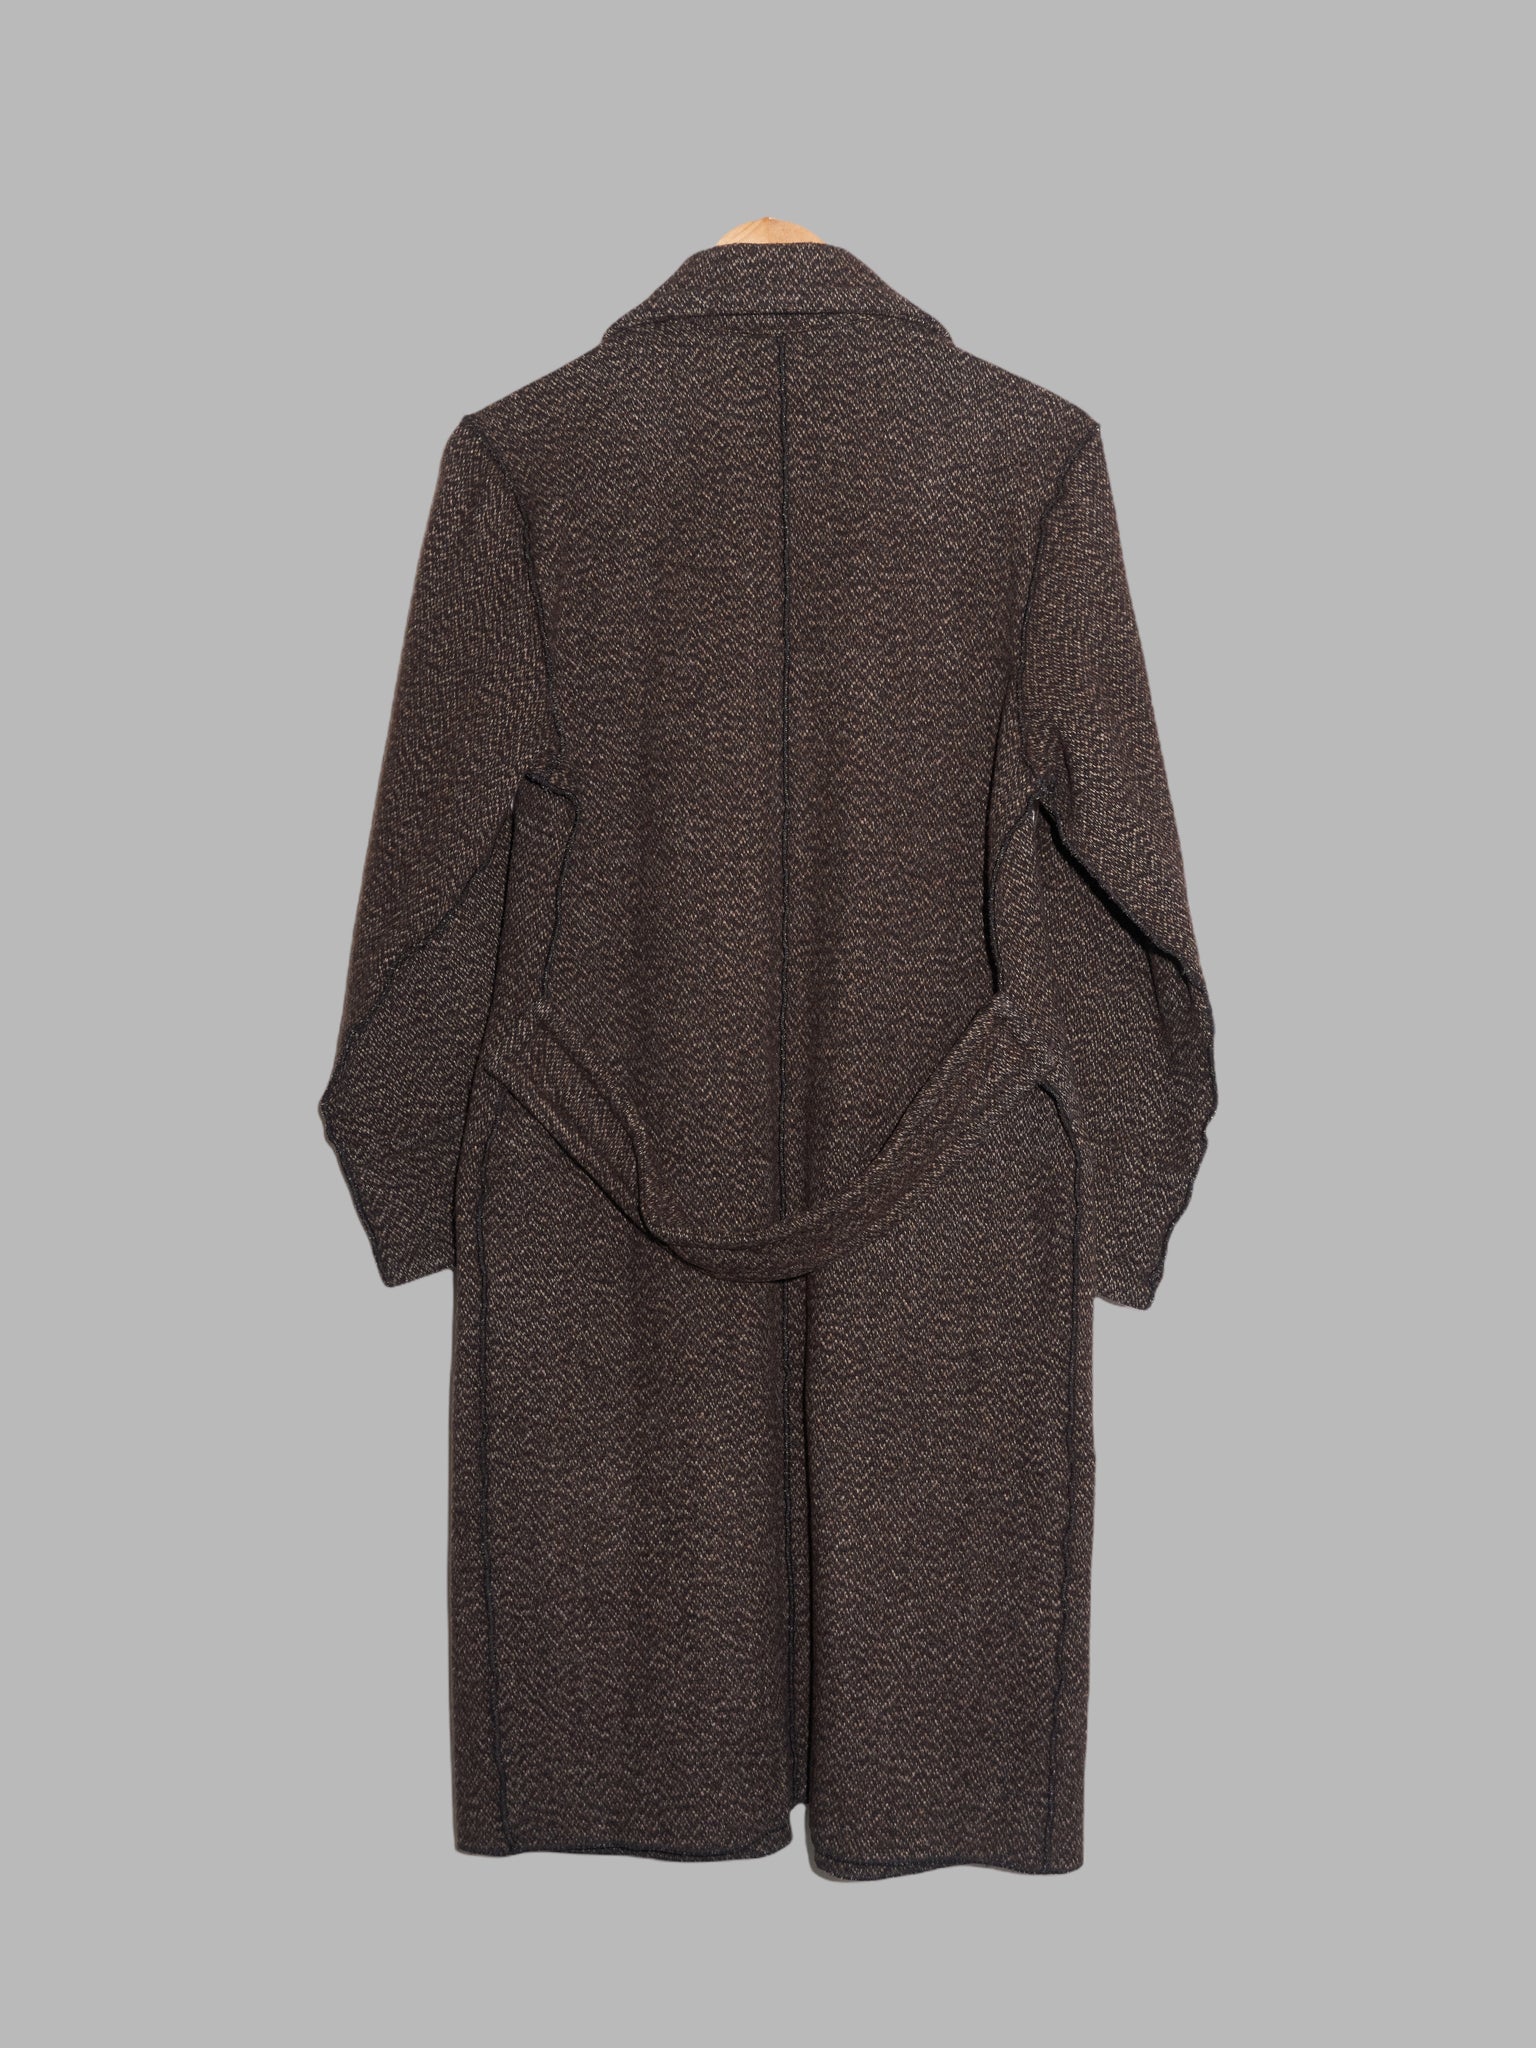 Jean Colonna textured brown knit overlocked three button coat - size M